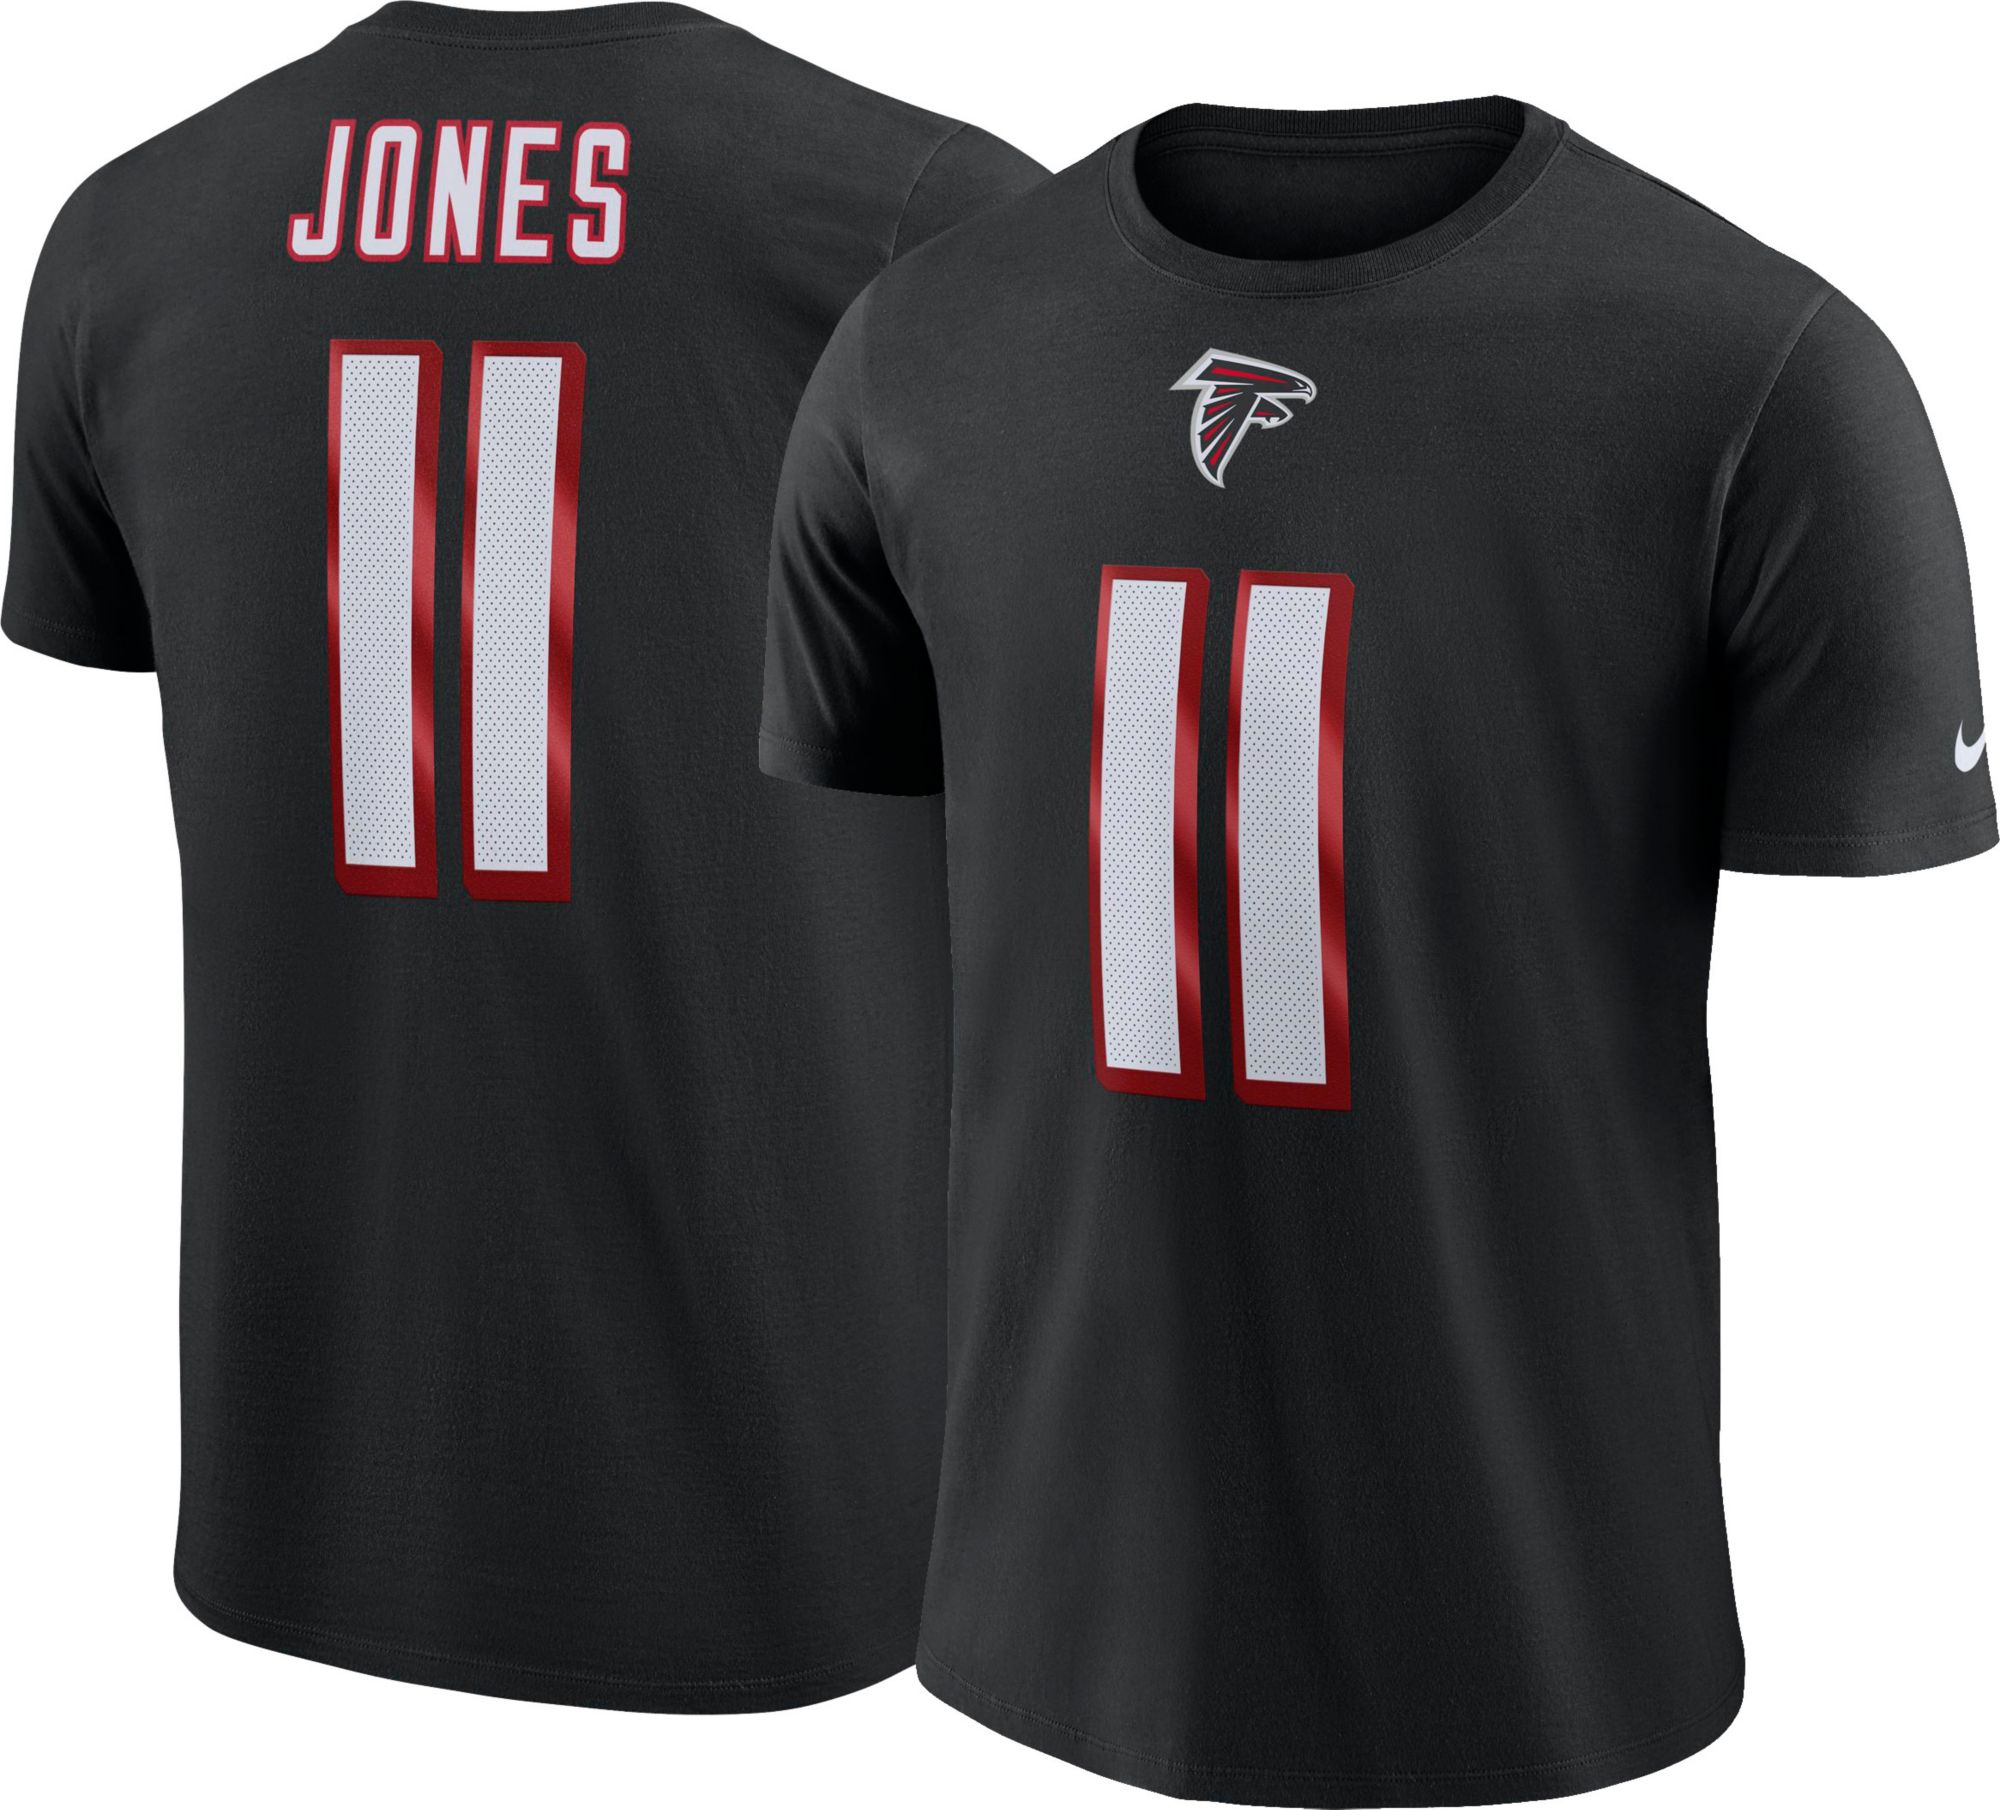 Atlanta Falcons Pride Black T-Shirt 